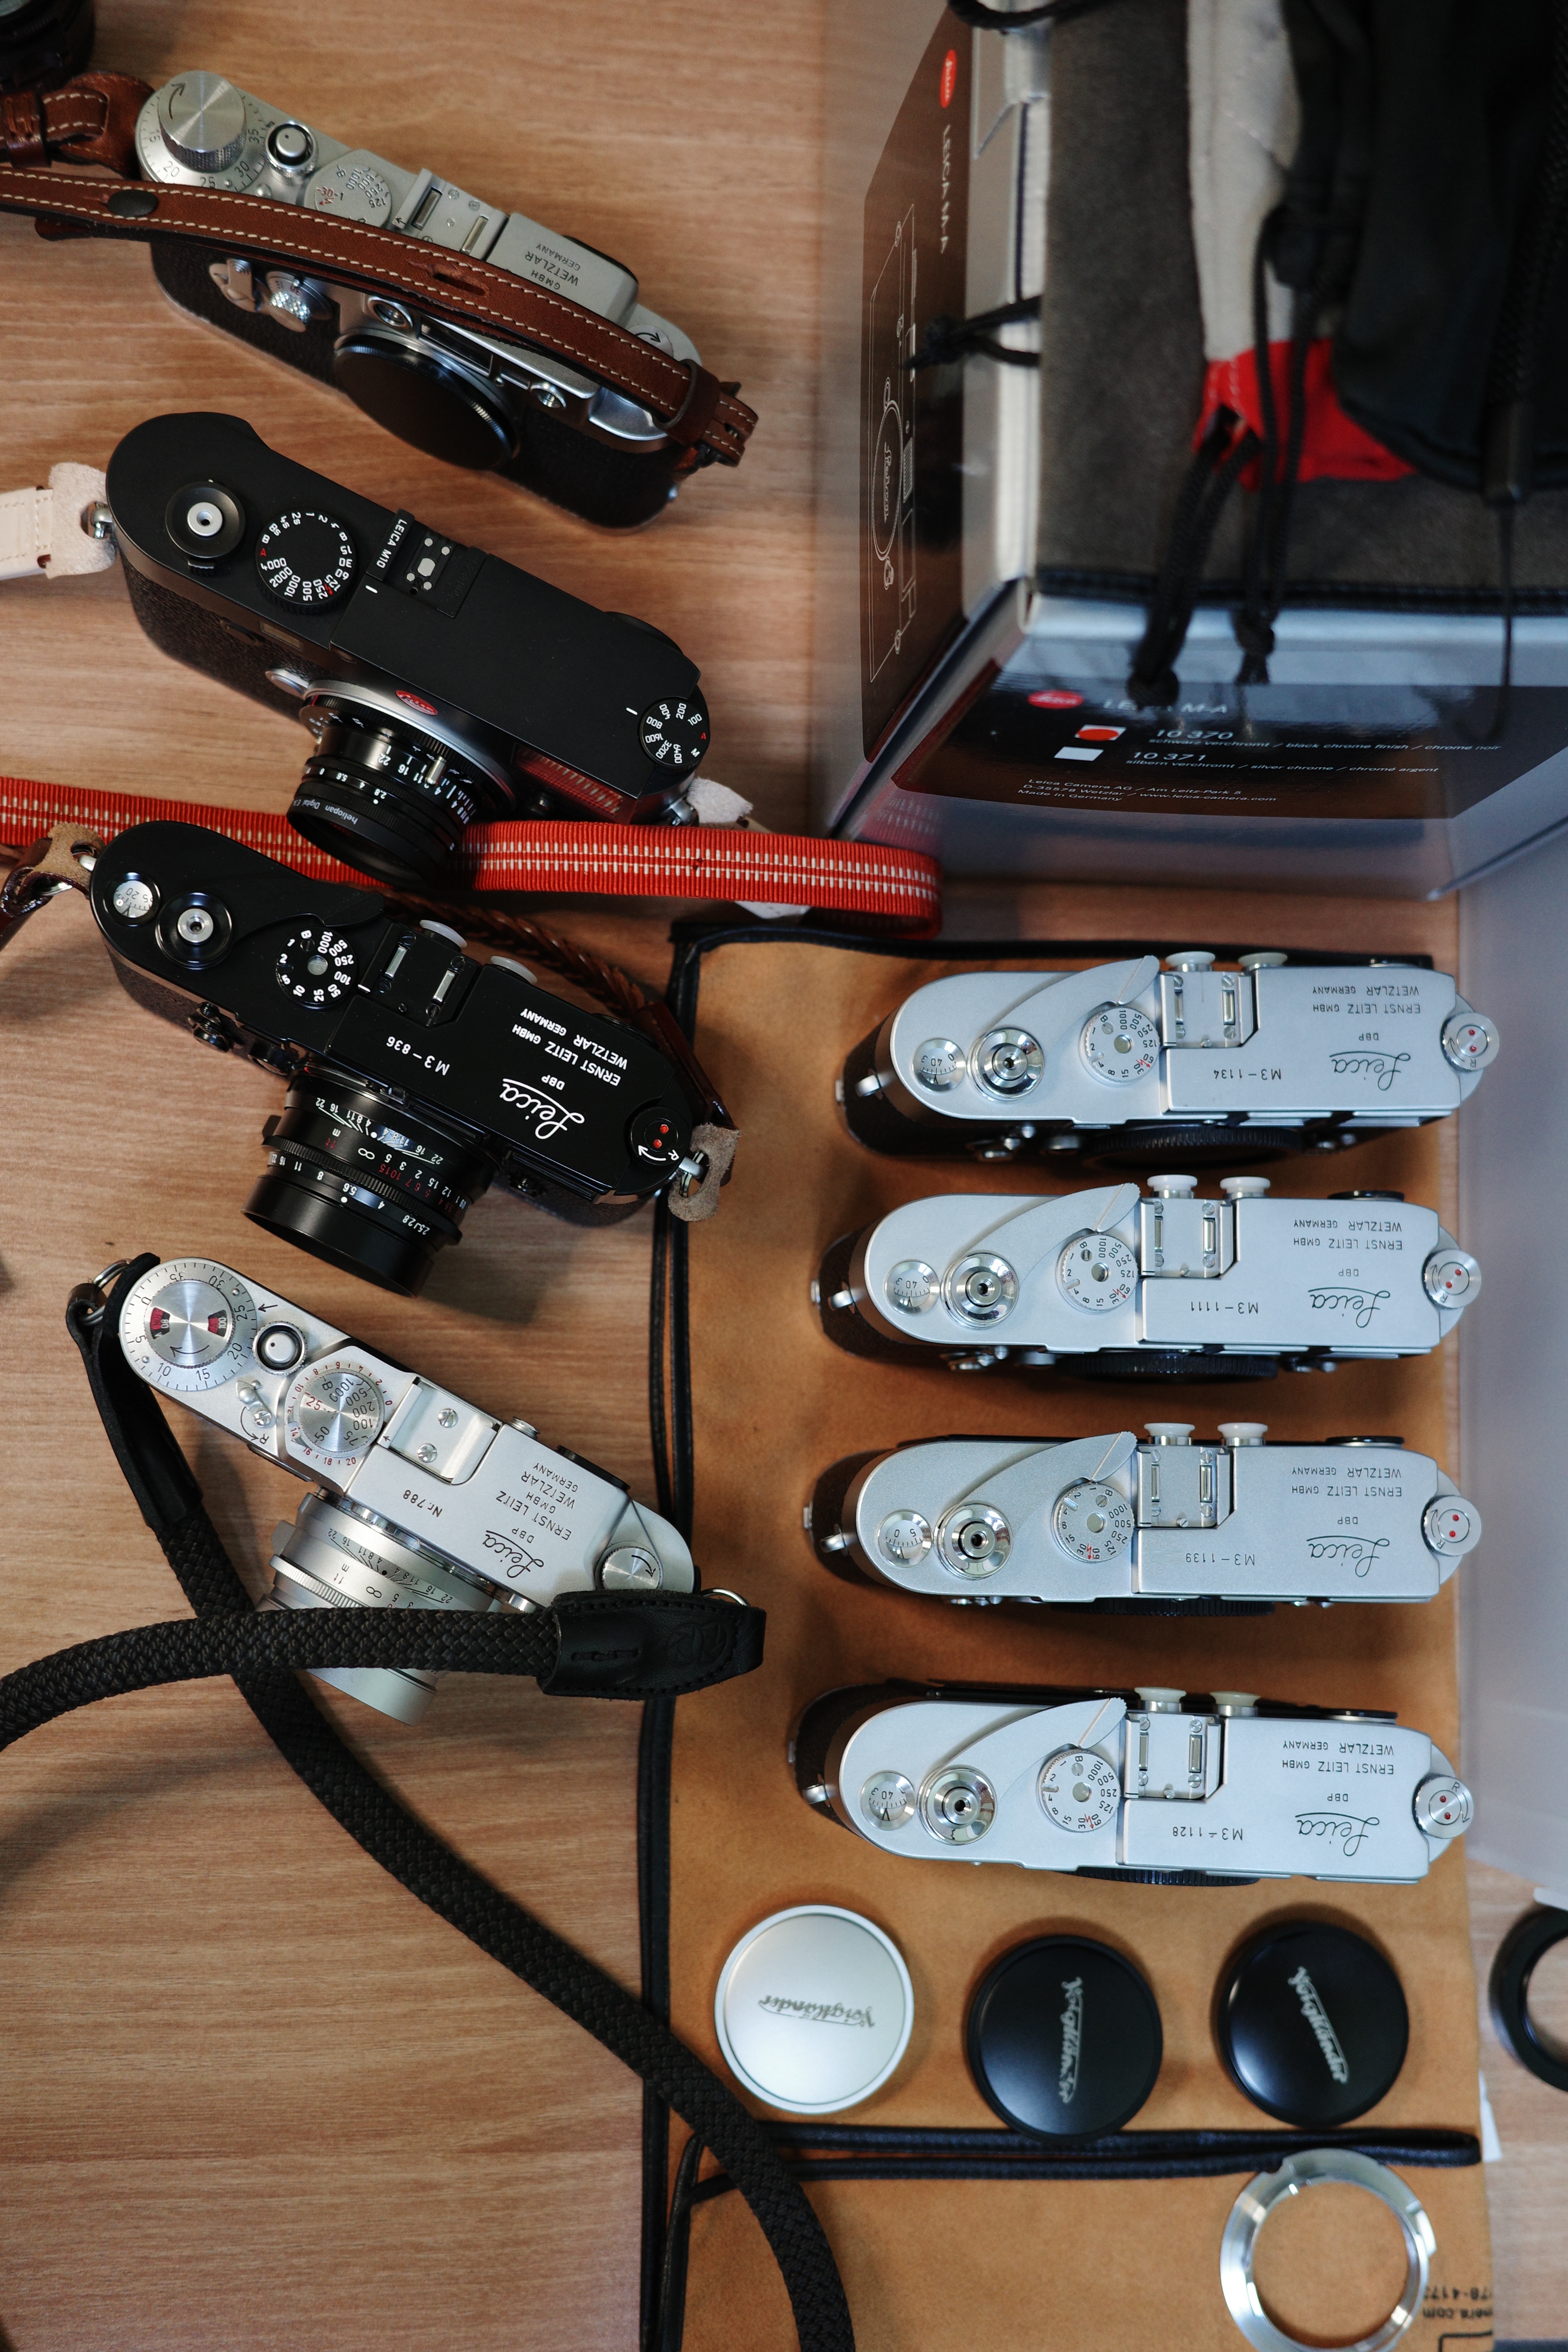 Leica bodies with Voigtländer lenses